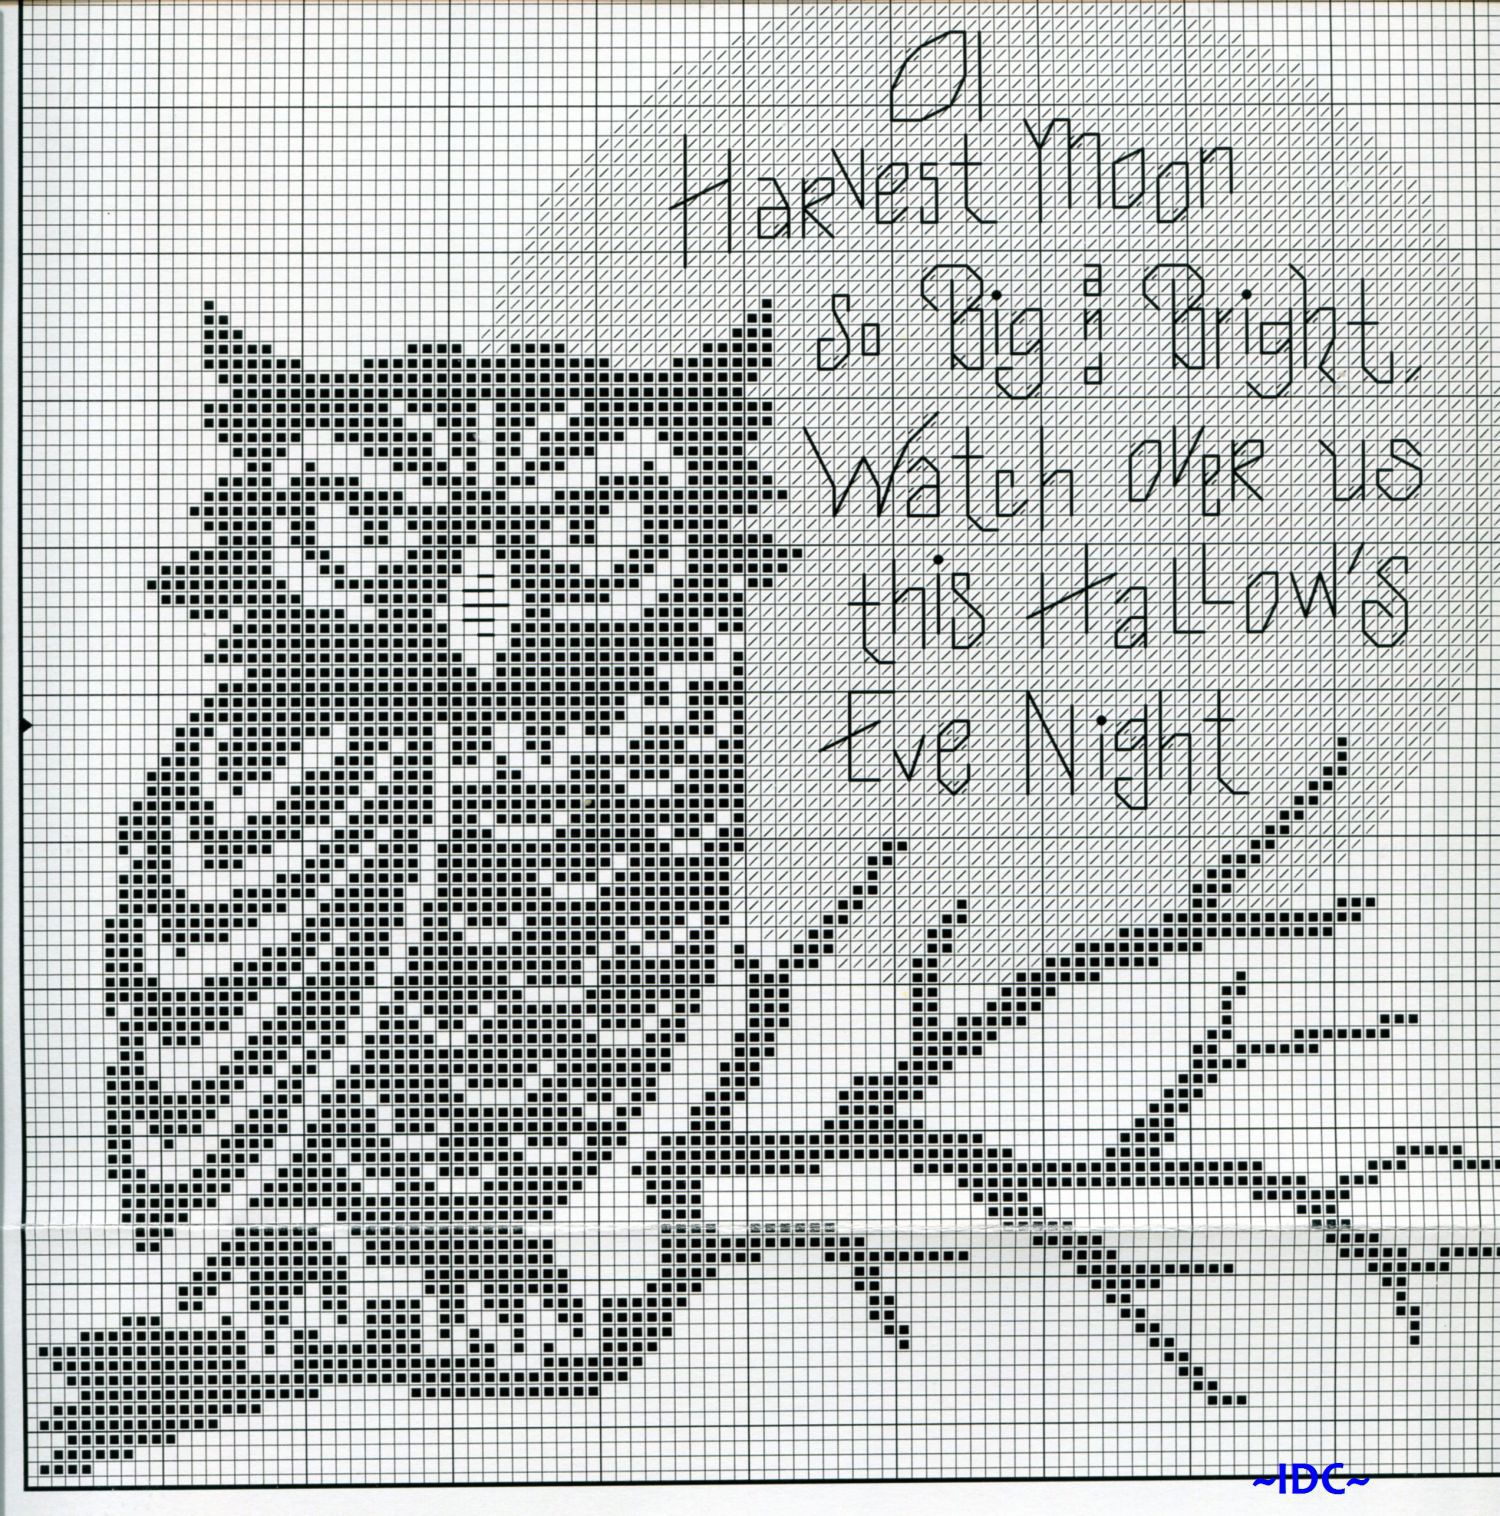 Halloween owl cross stitch pattern (2)